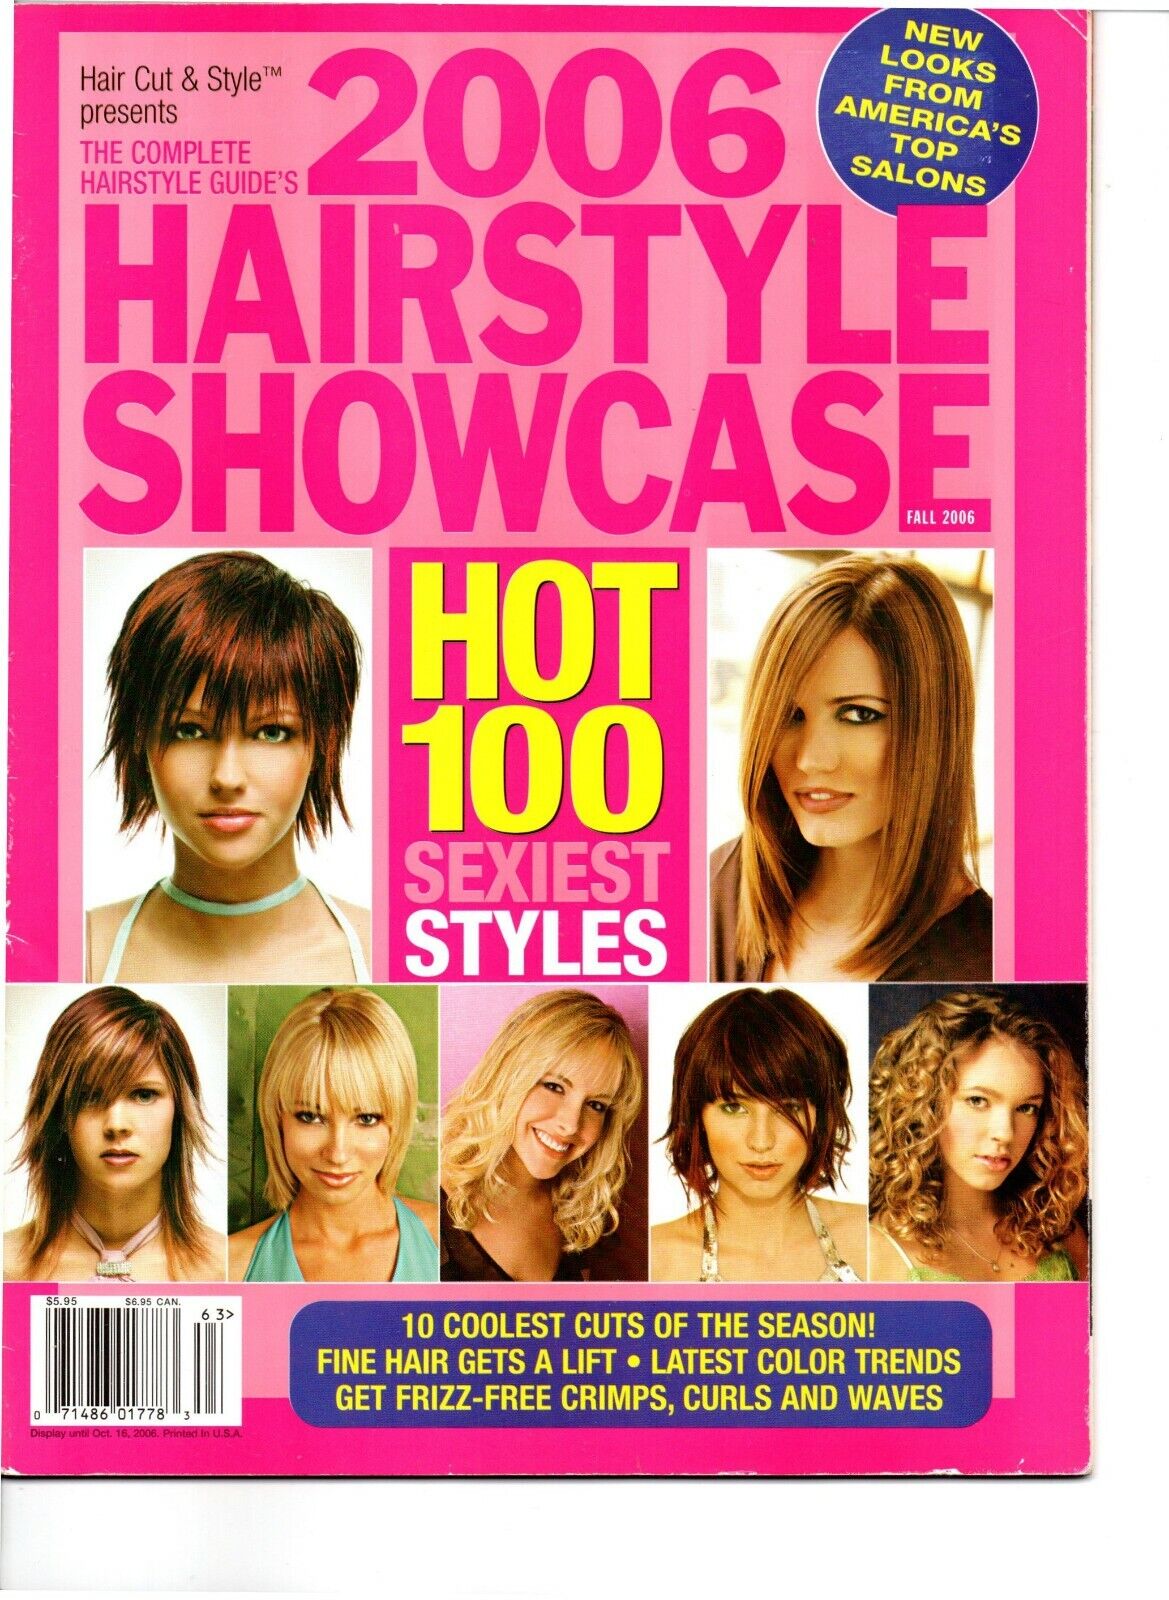 Hair Cut & Style 2006 Hairstyle Showcase Magazine Fall 2006 | eBay